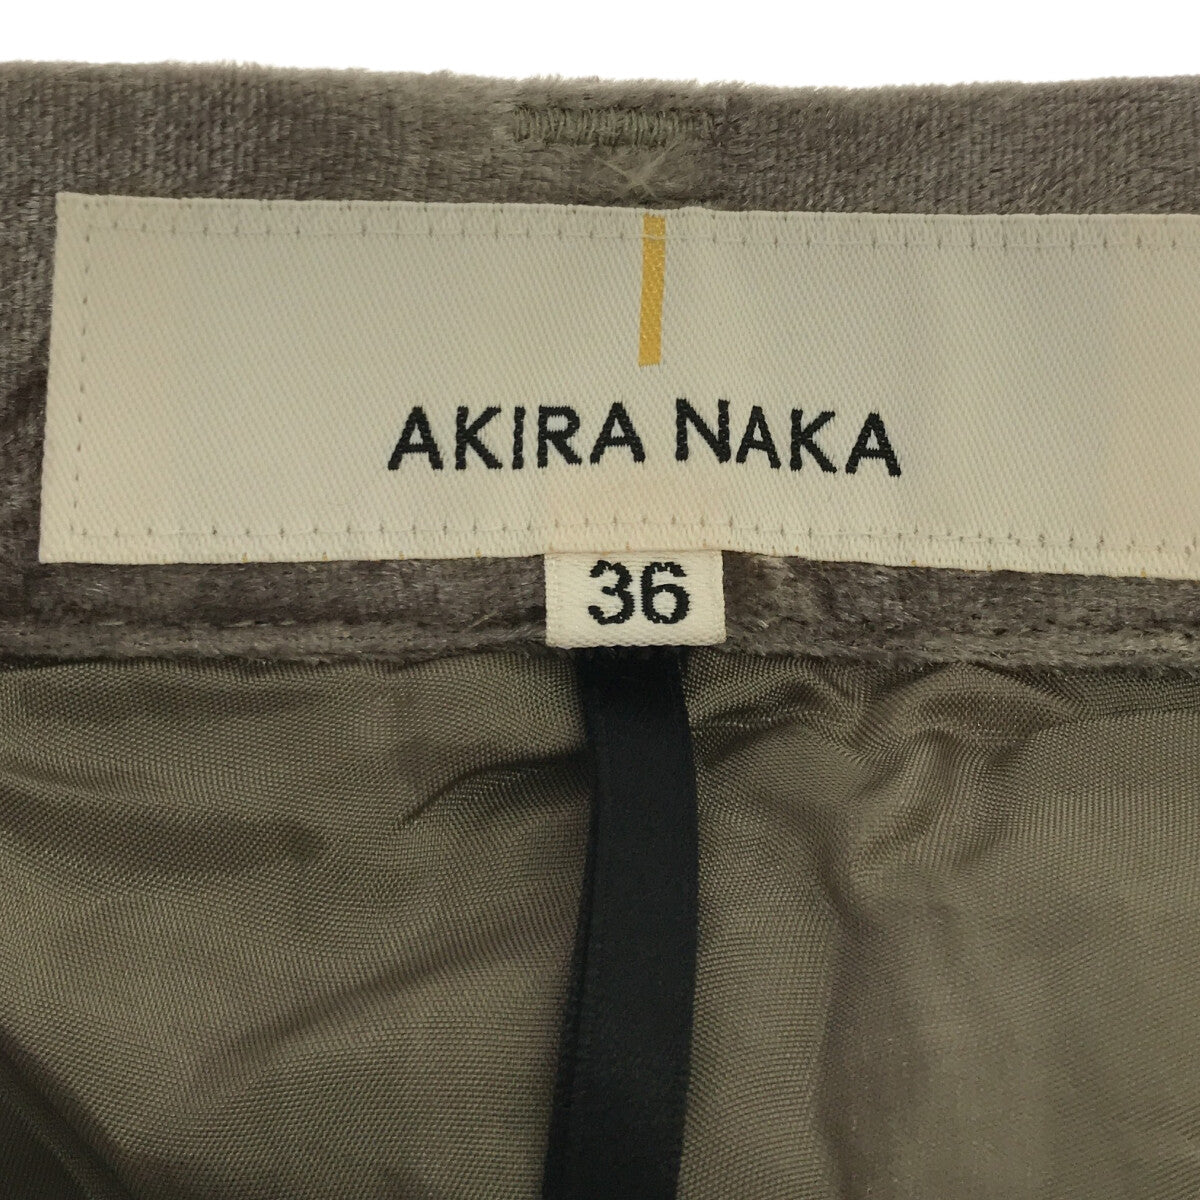 AKIRANAKA / アキラナカ | アコーディオンプリーツ パンツ | 36 | – KLD